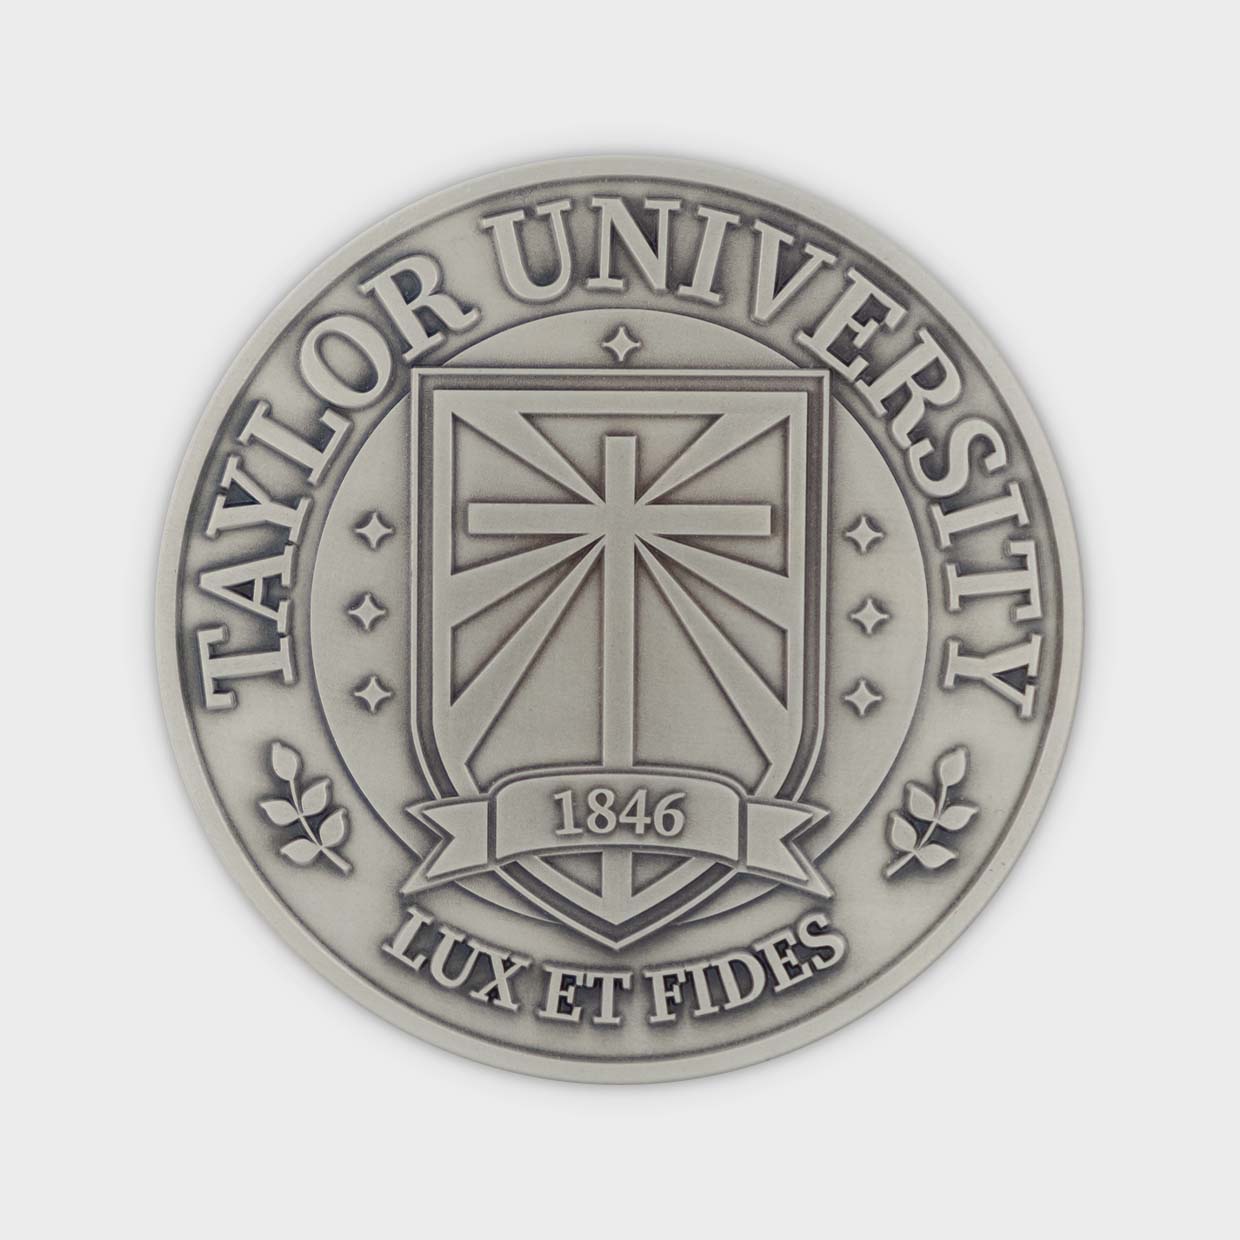 Taylor University Medal